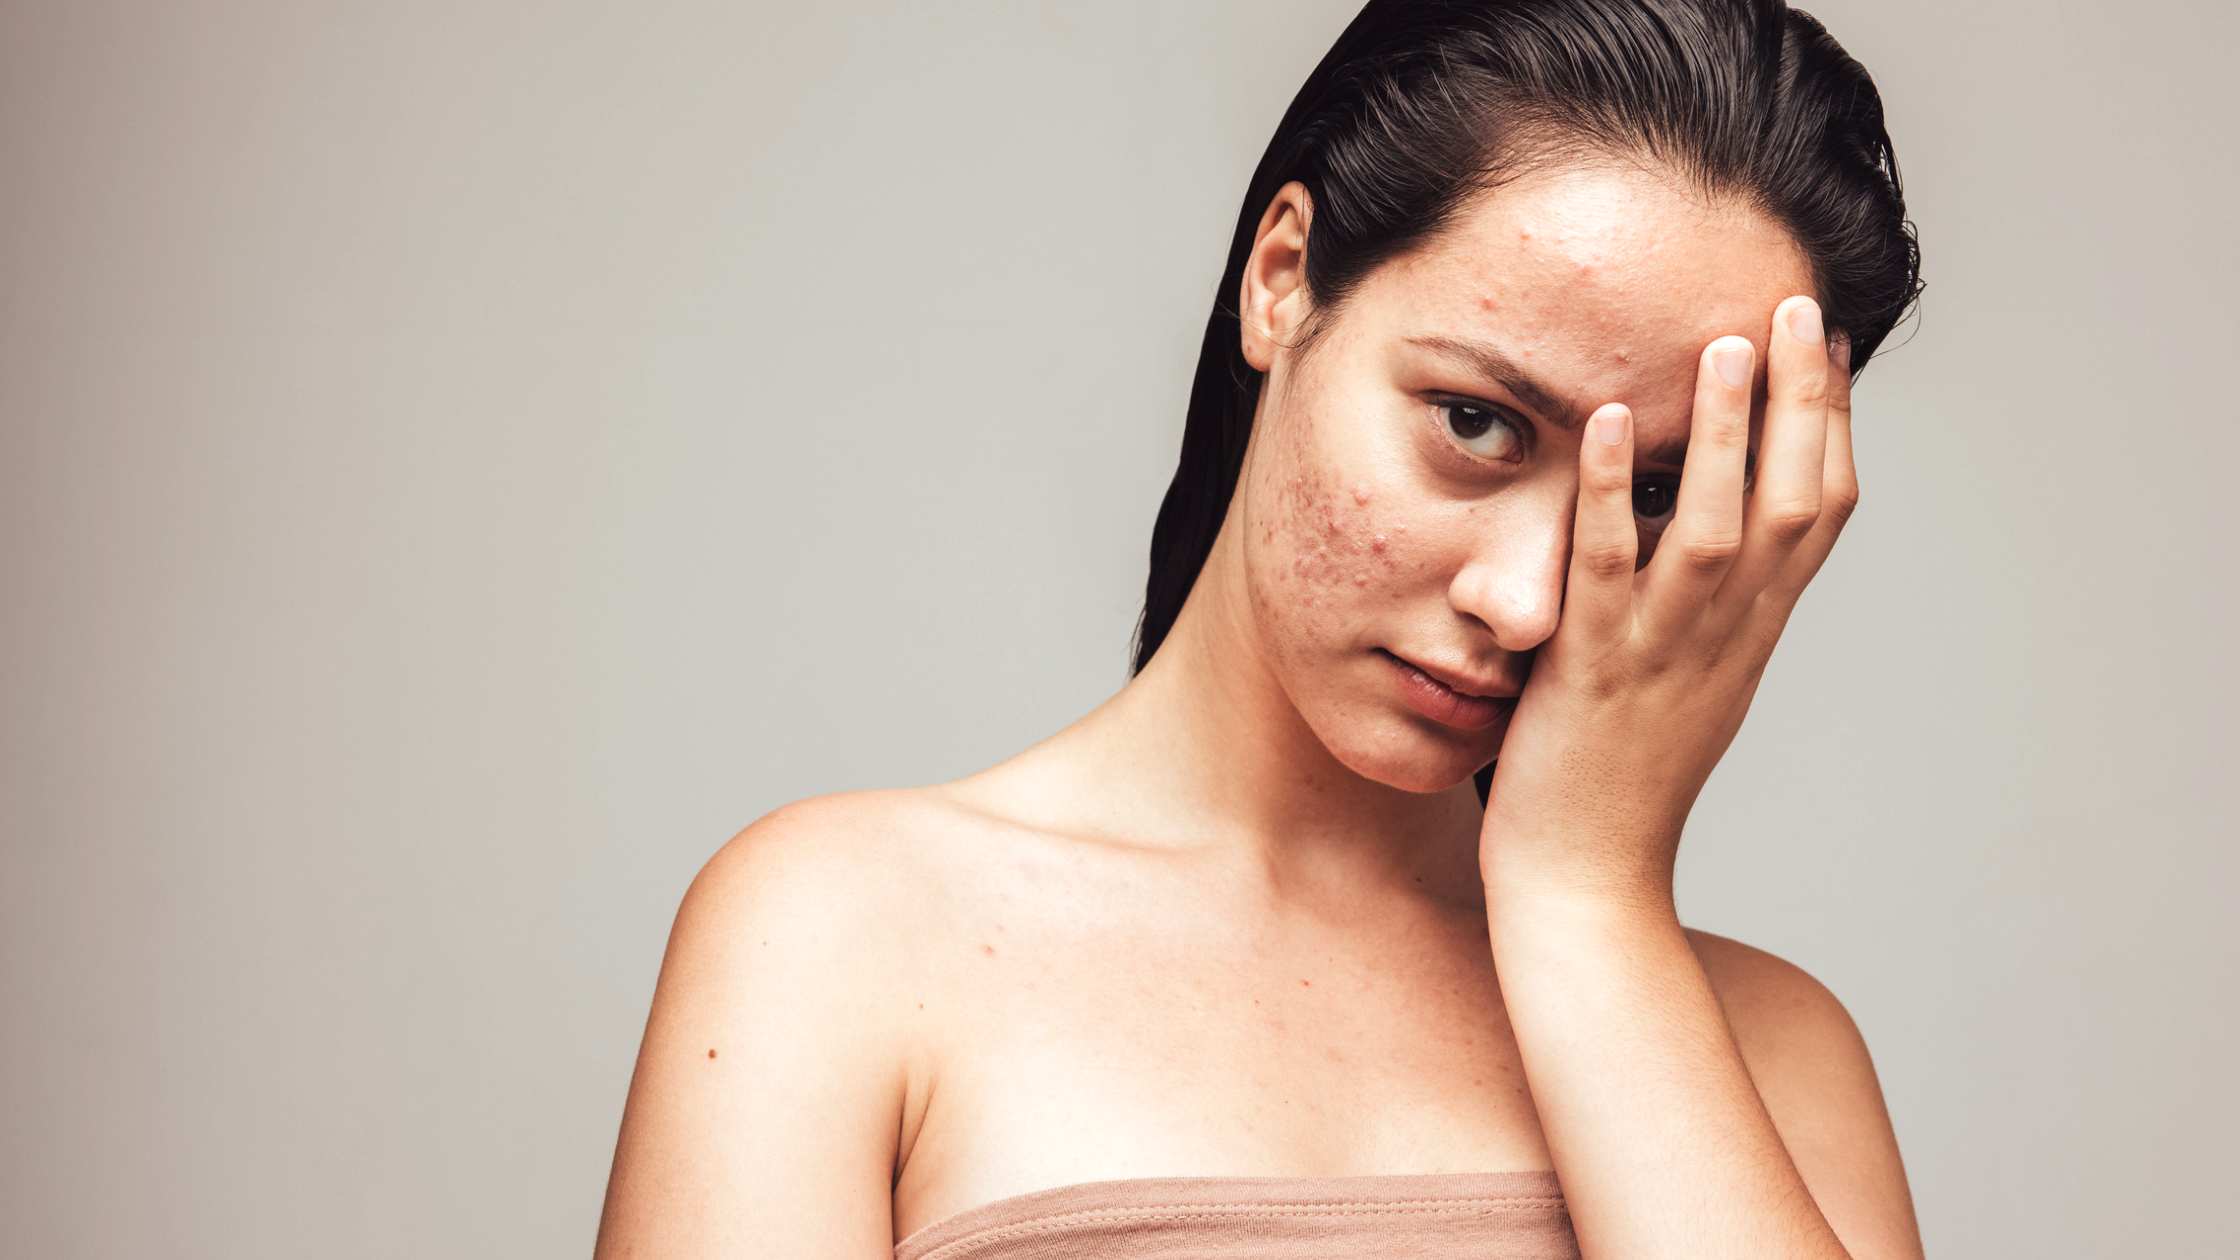 body acne treatments